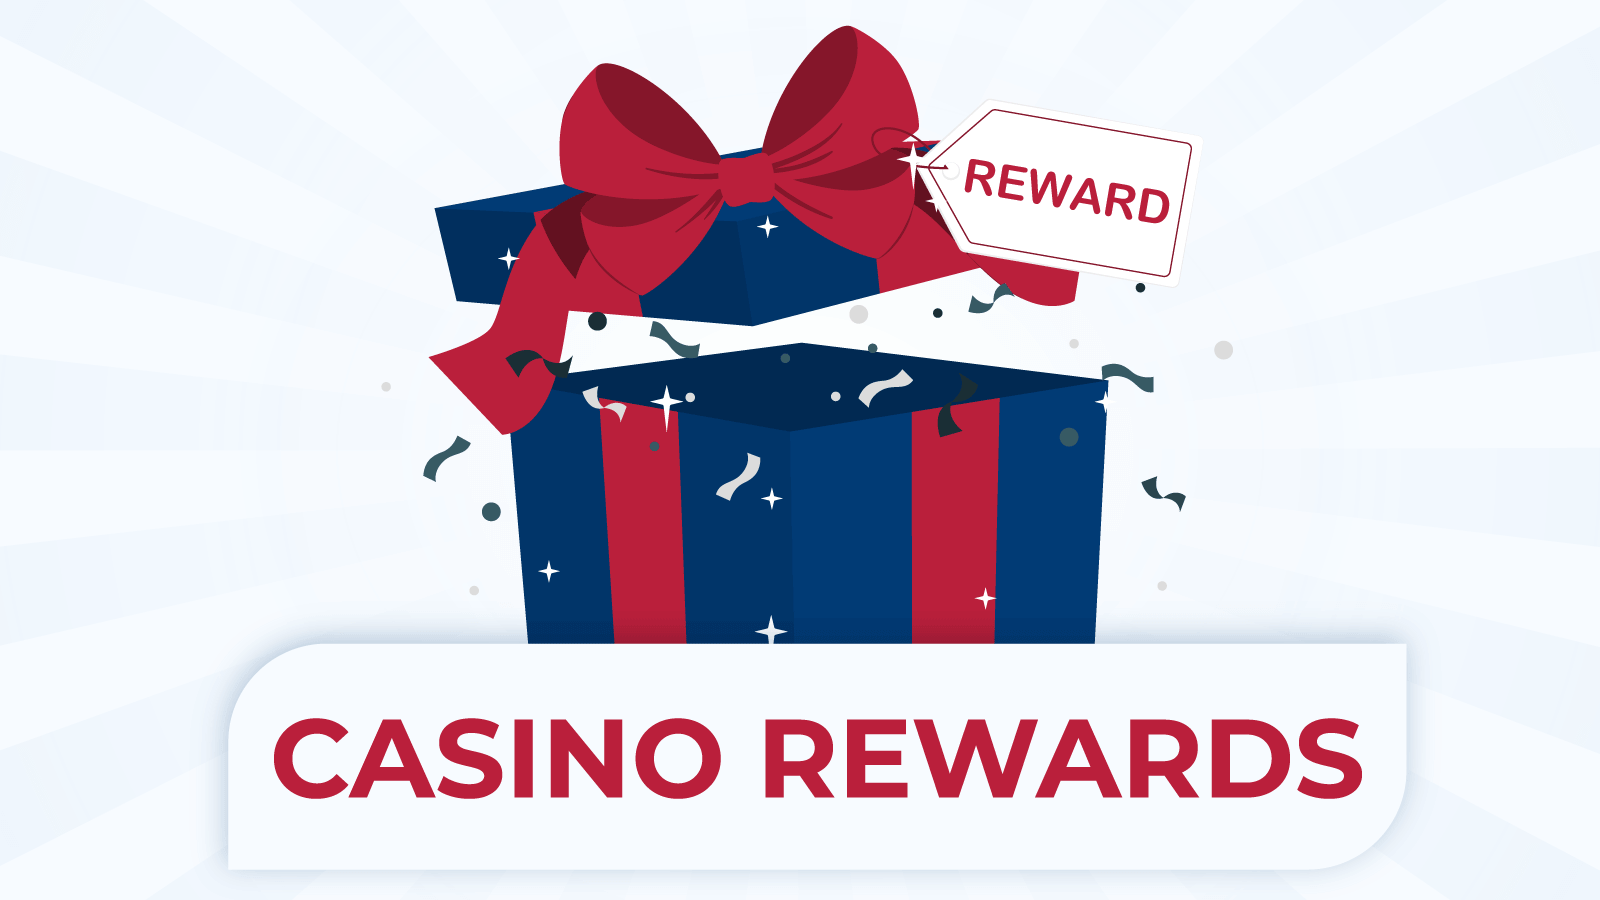 Casino Classic - A Member of Casino Rewards